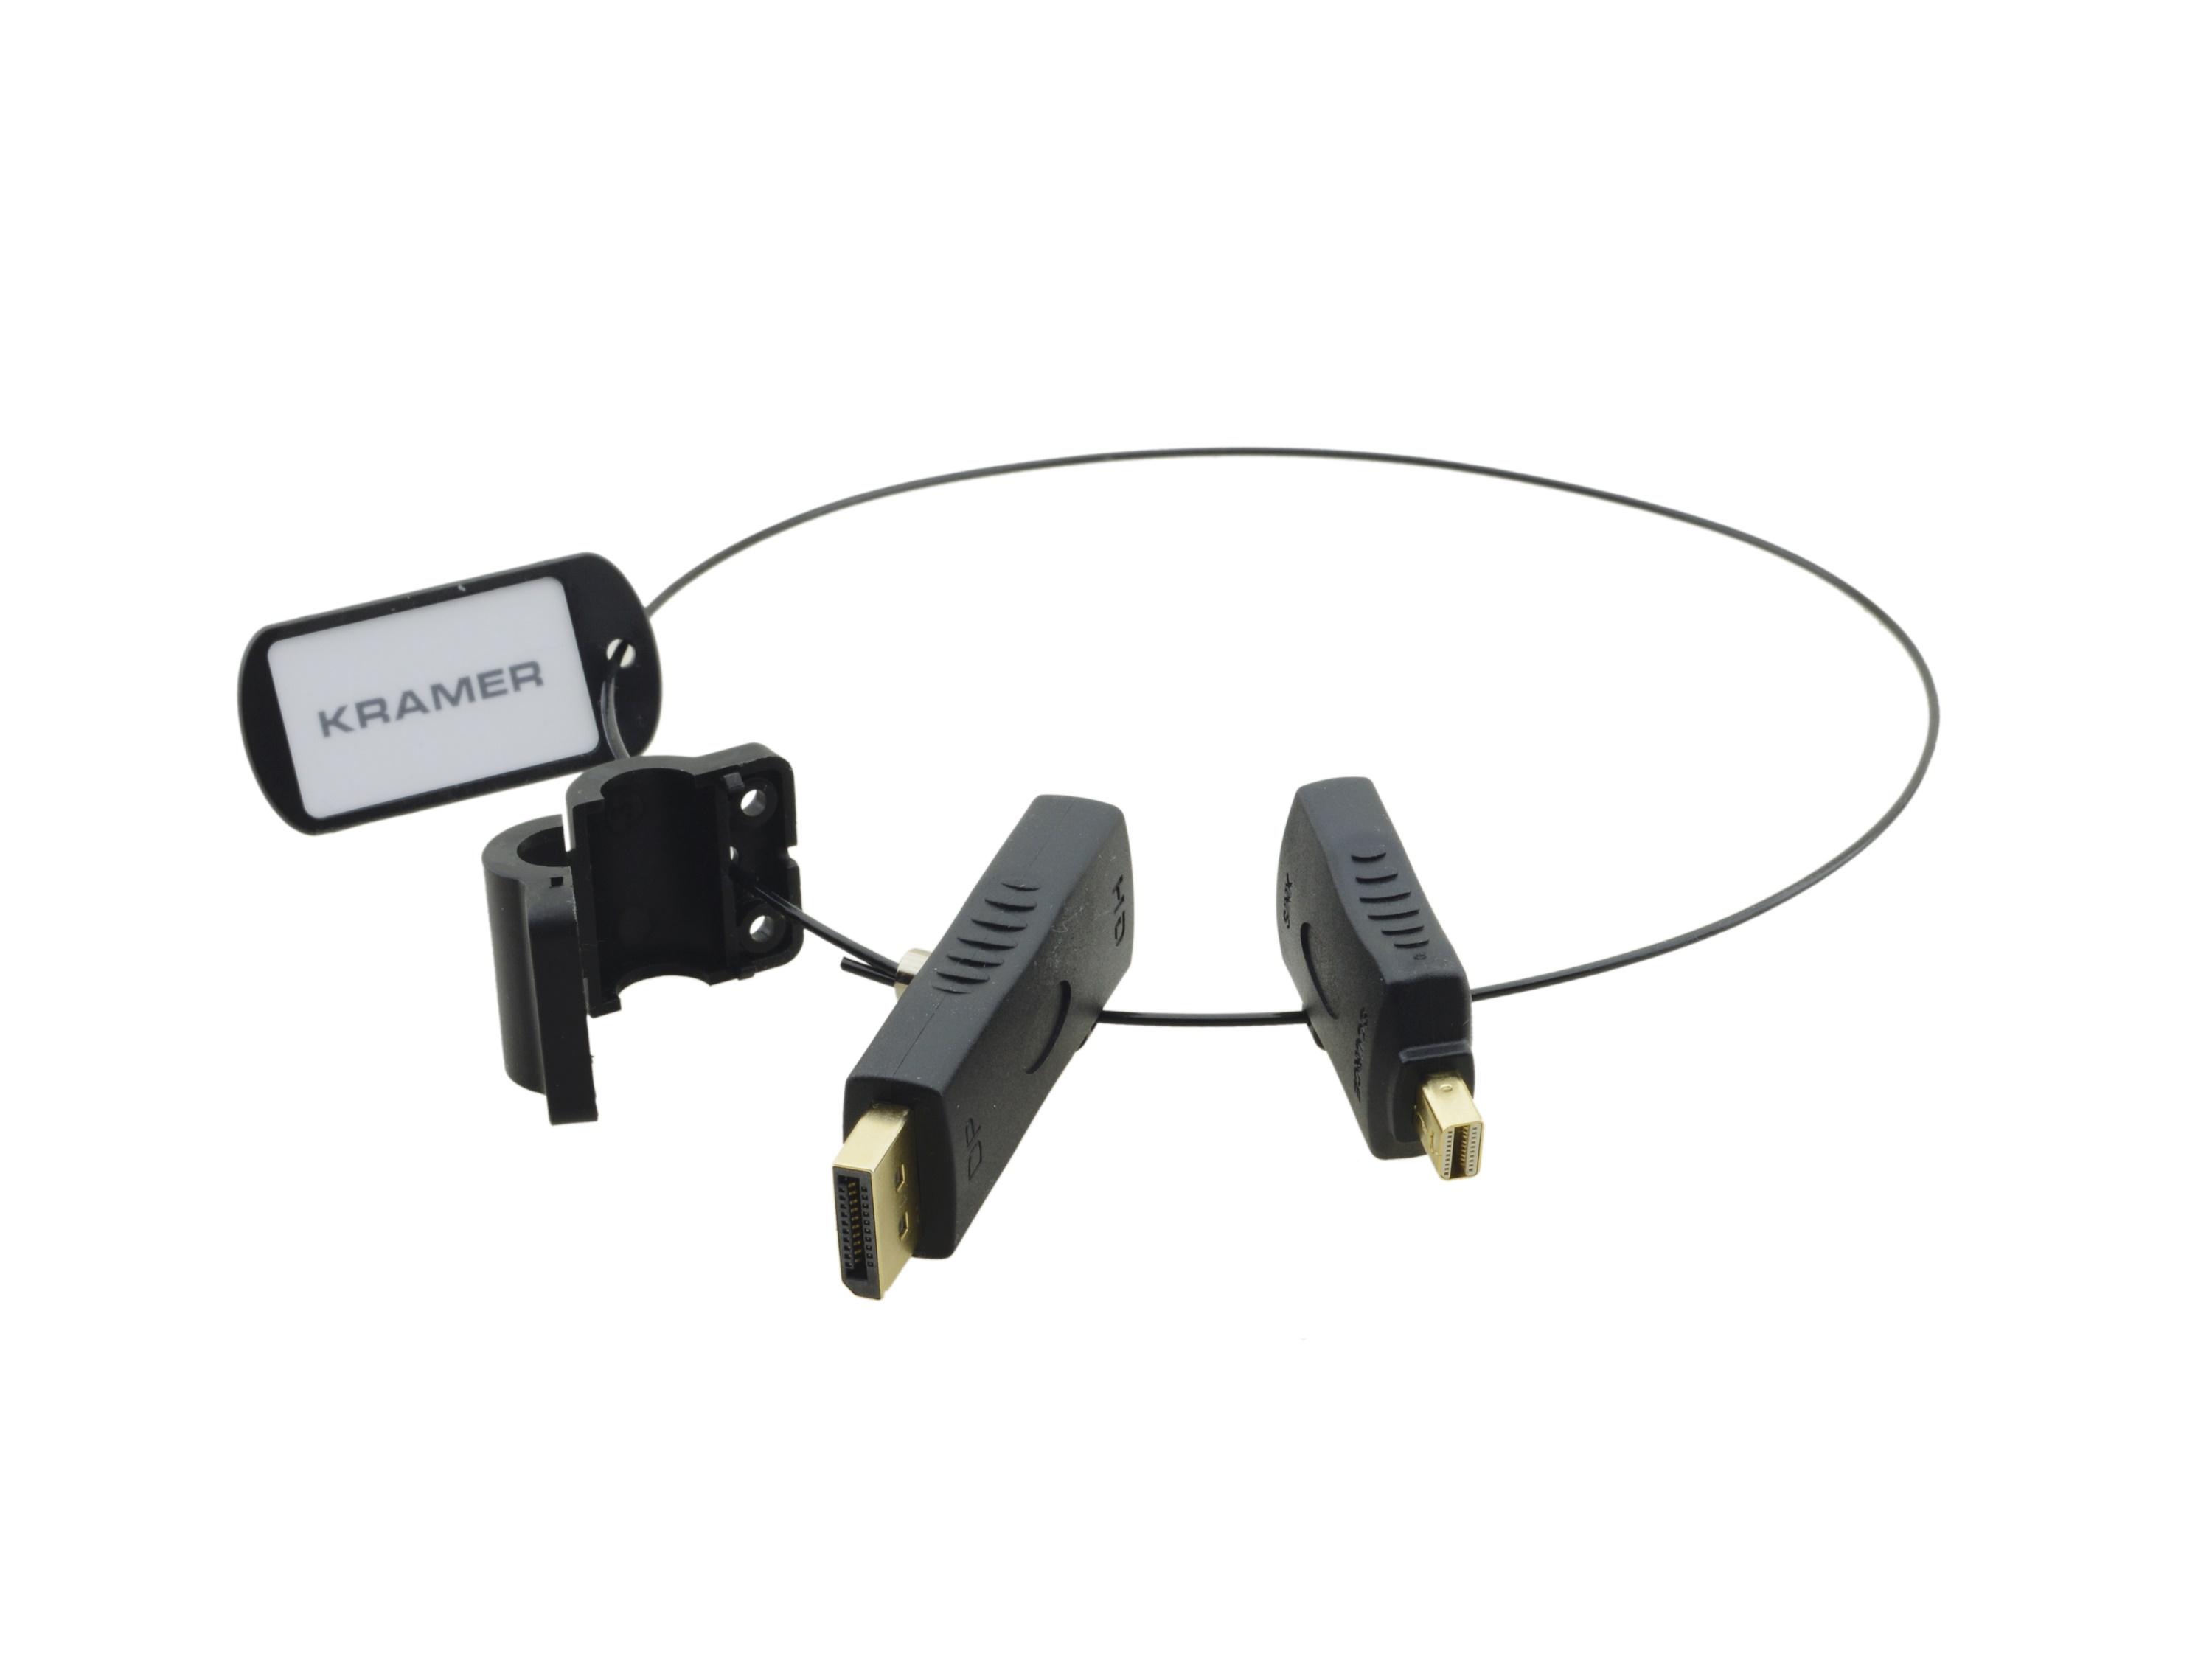 AD-RING-1 HDMI Adapter Ring - 1 by Kramer